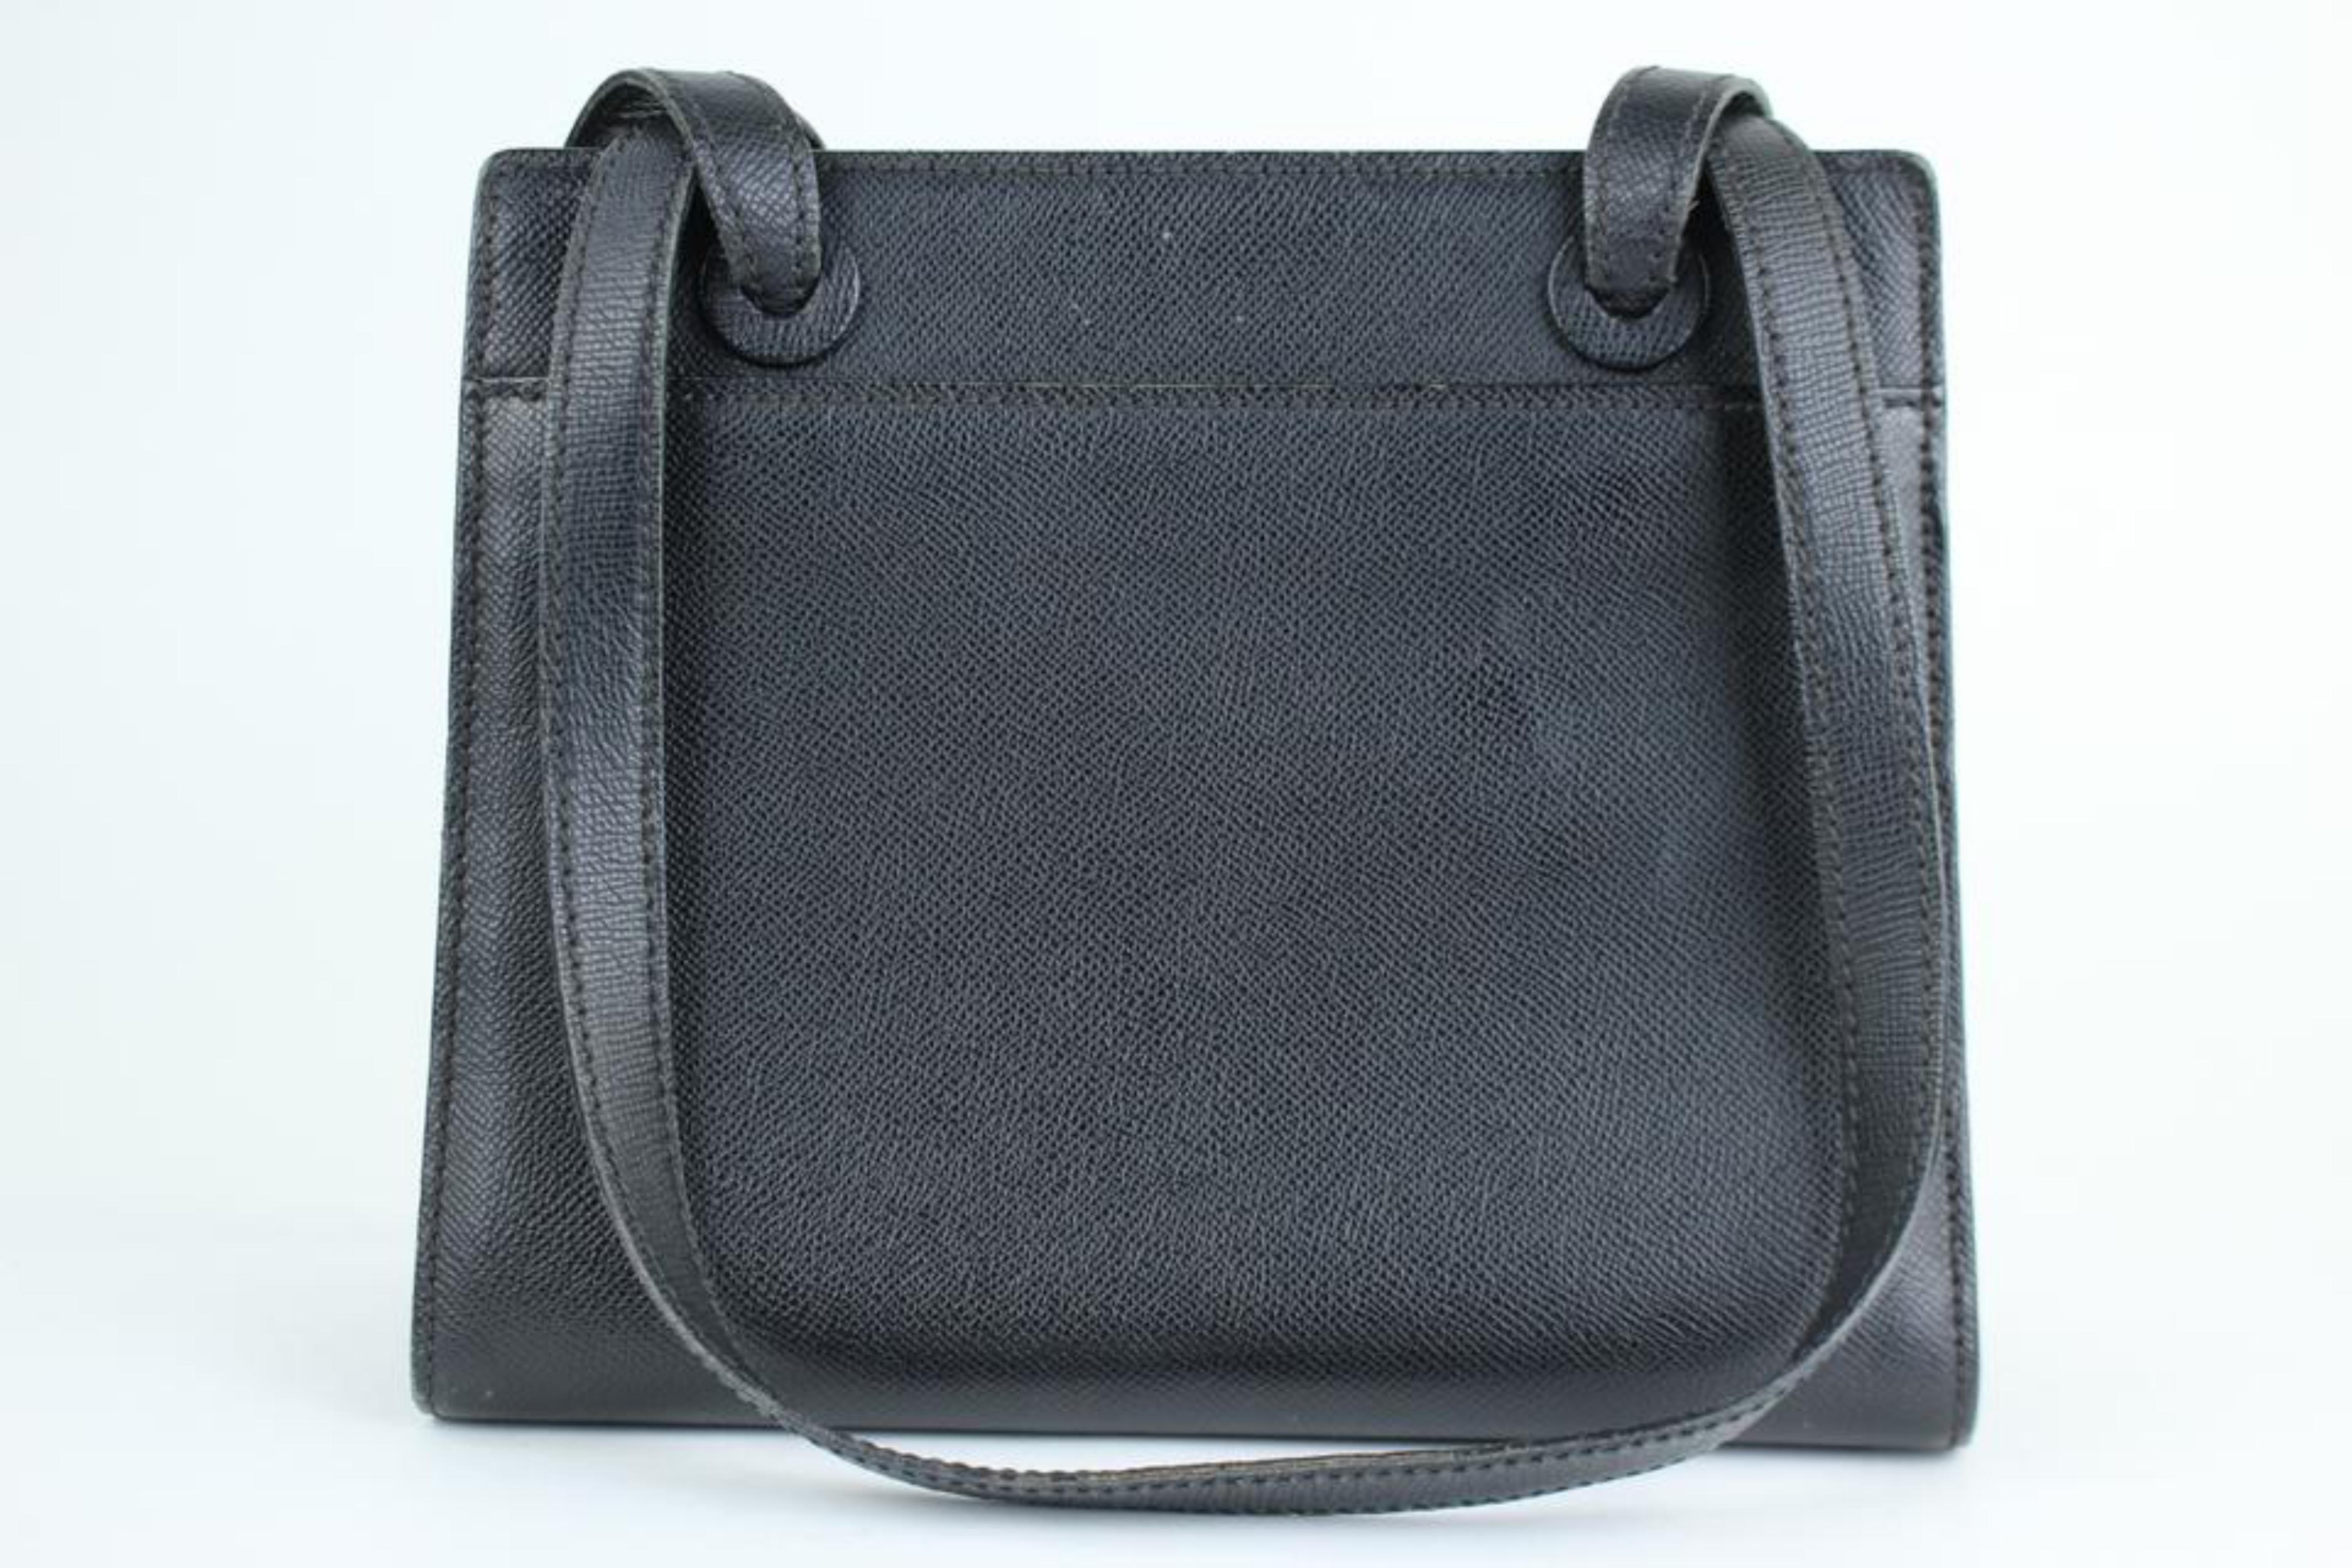 Chanel Caviar Tote 902ct9 Cczz06 Black Leather Shoulder Bag 6